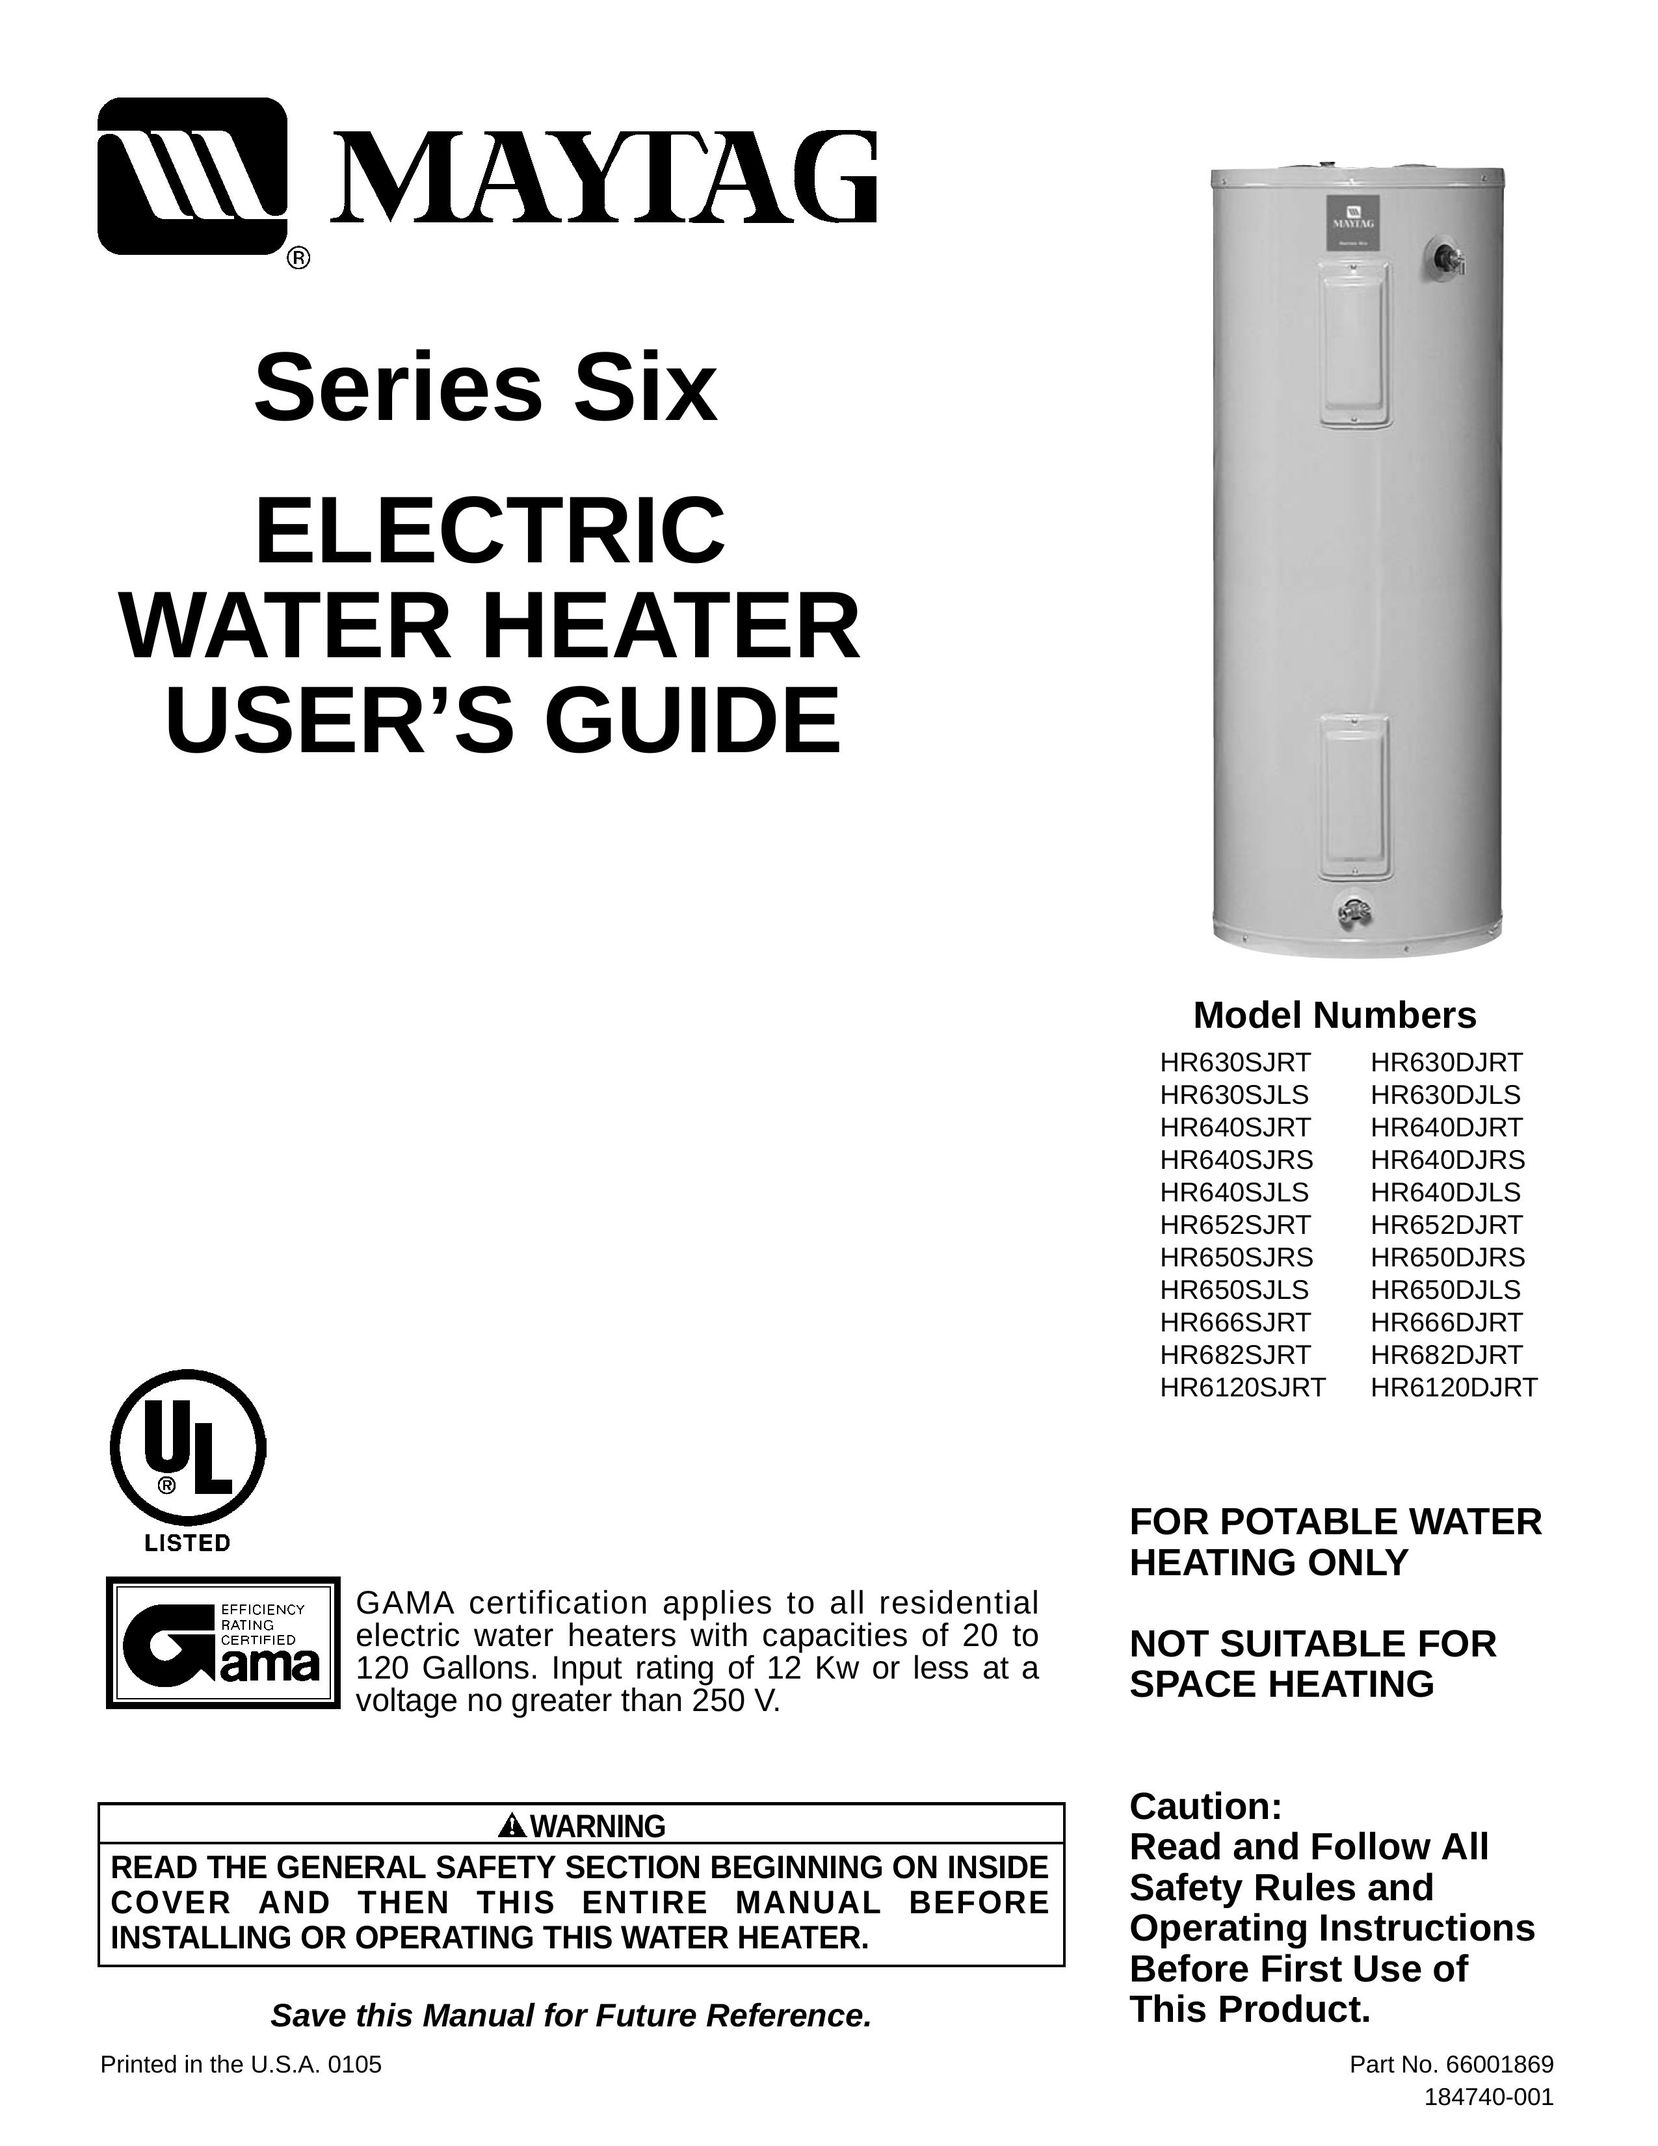 Maytag HR650DJRS Water Heater User Manual